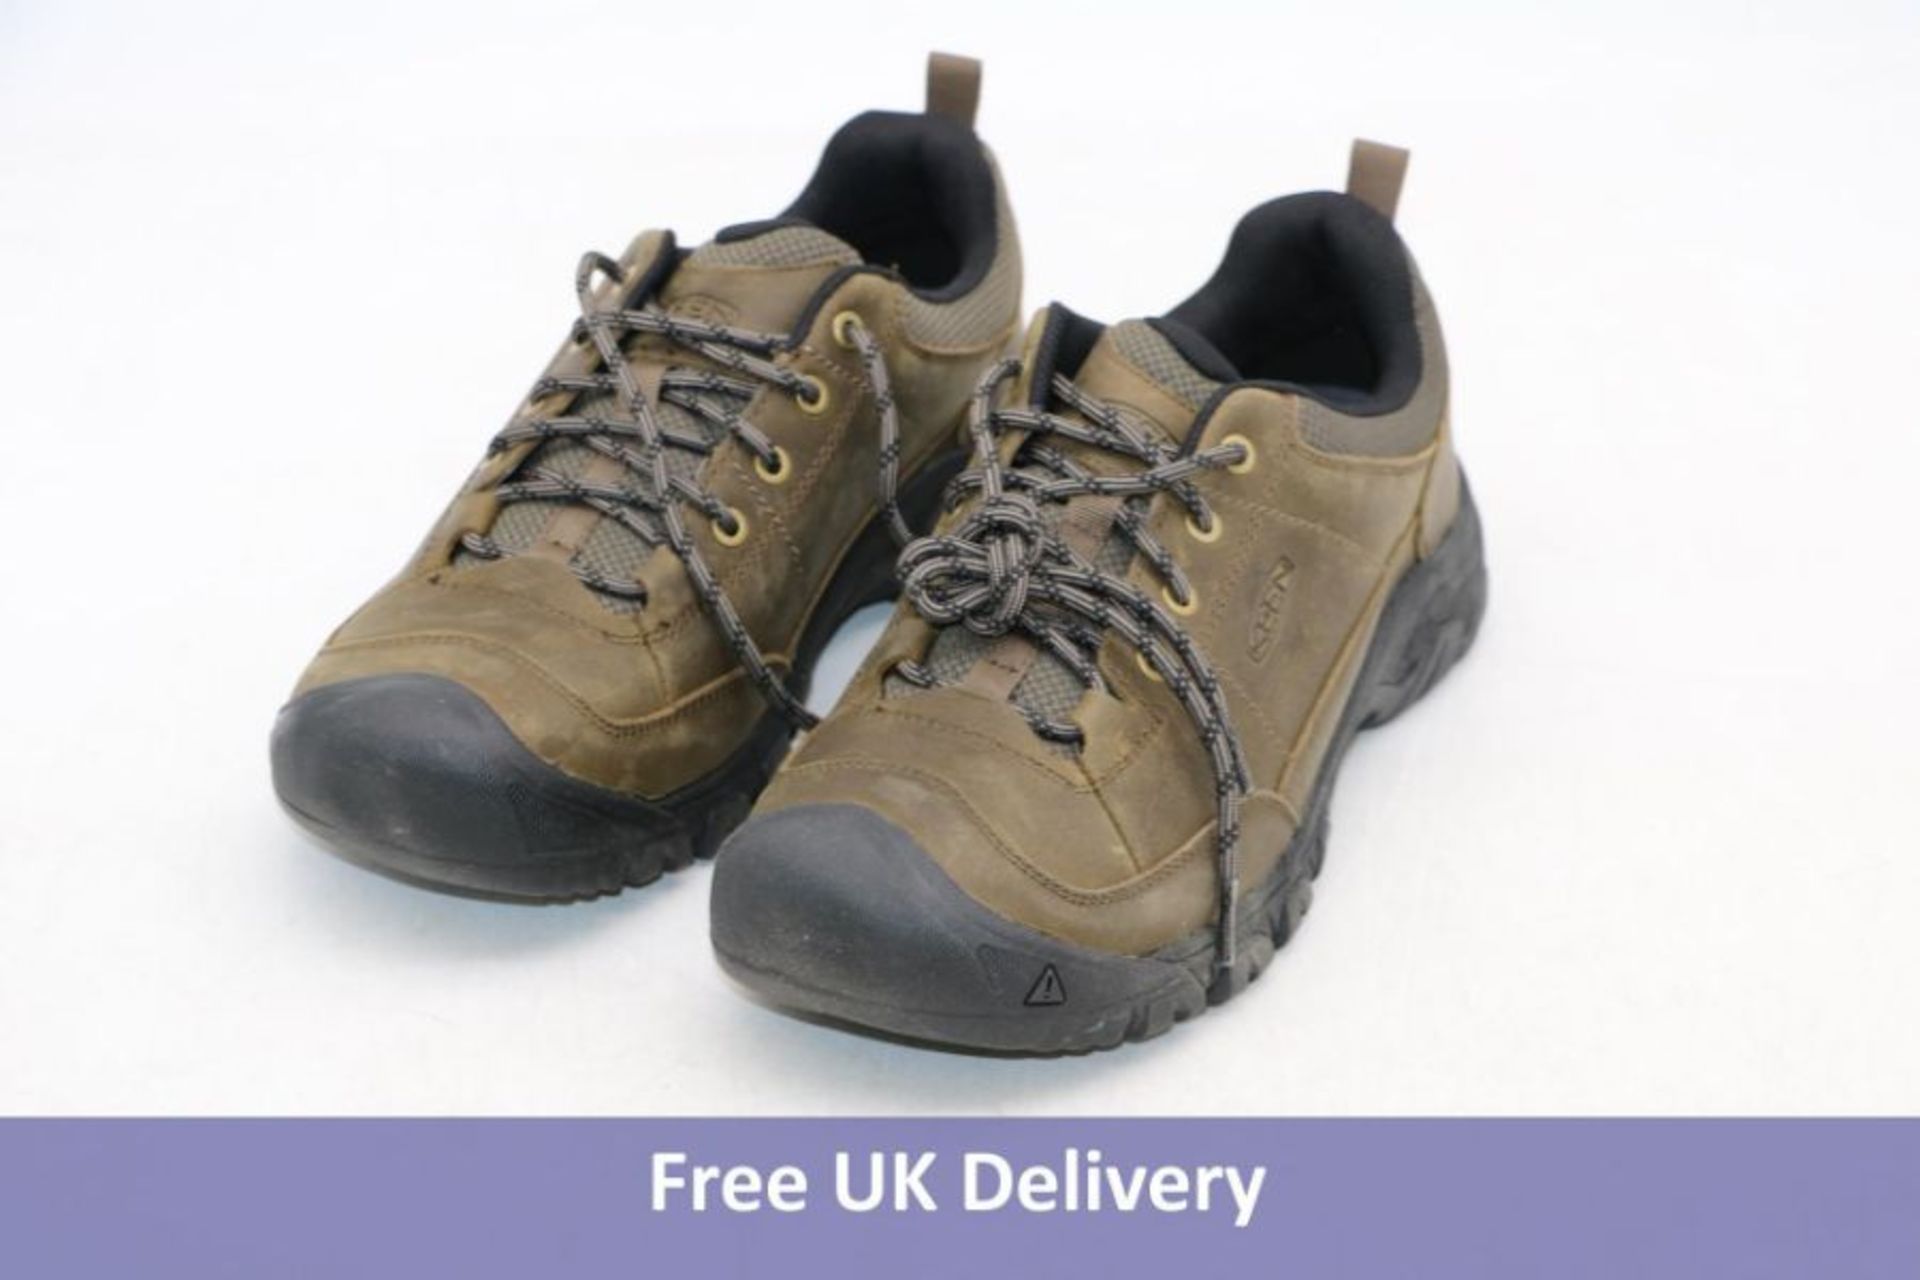 Keen 1022514 Men's Targhee III Oxford Shoes, Canteen/Black, UK 8.5. Without box